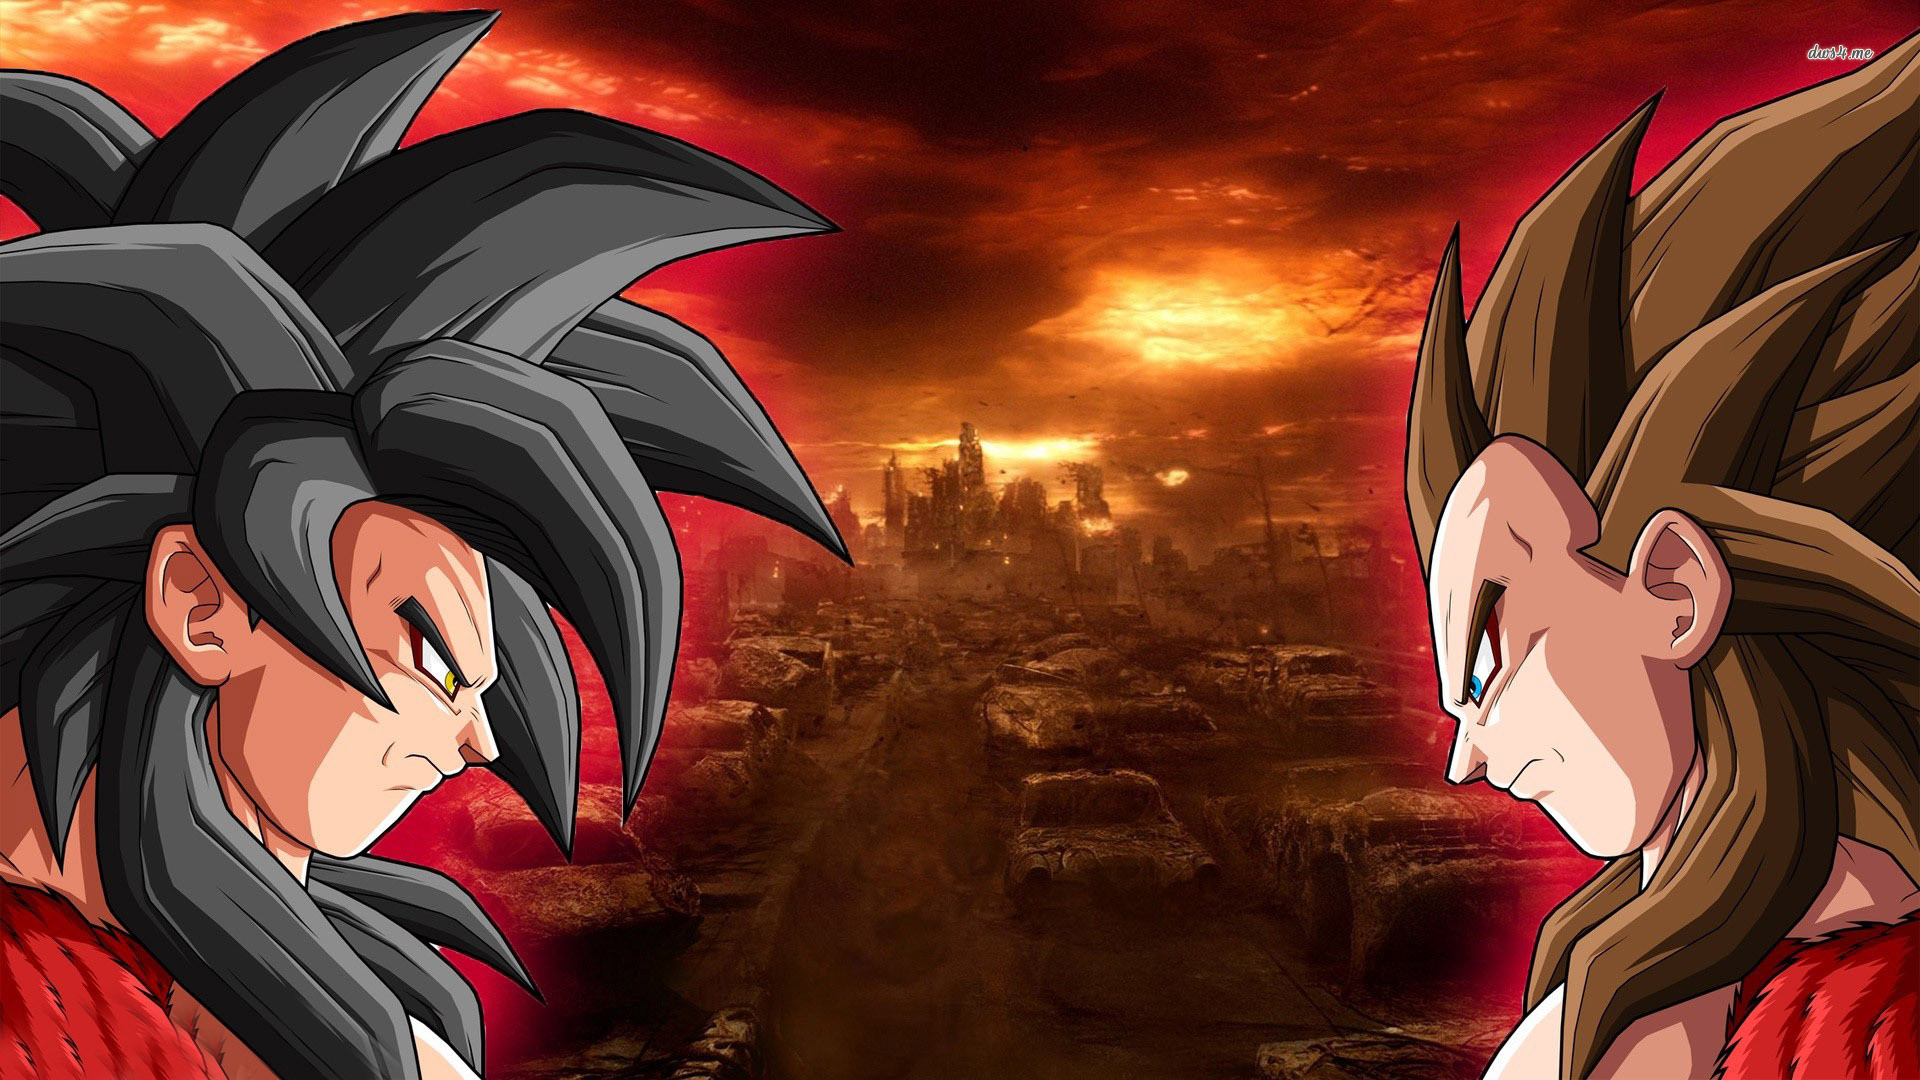 HD Quality Super Saiyan Goku Vs Vegeta Dragon Ball Z Wallpaper .